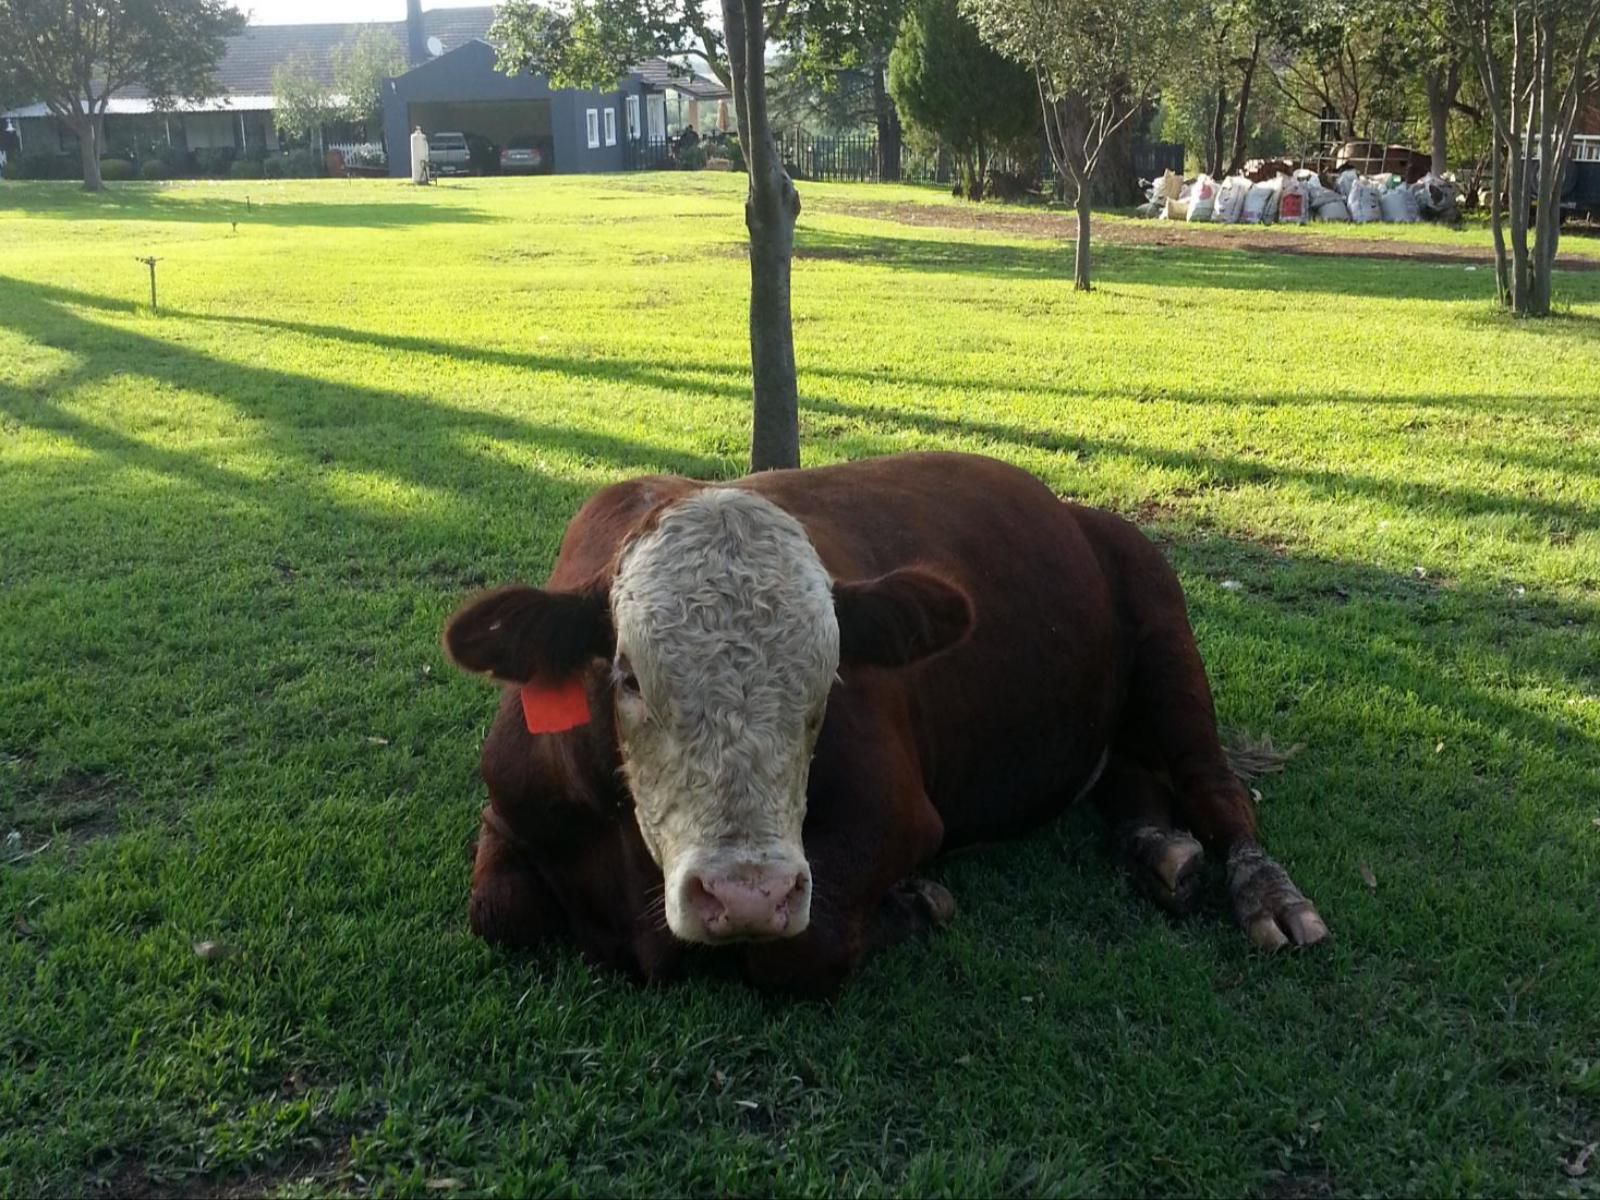 Stoneybrooke Farm Tierpoort Pretoria Tshwane Gauteng South Africa Cow, Mammal, Animal, Agriculture, Farm Animal, Herbivore, Water Buffalo